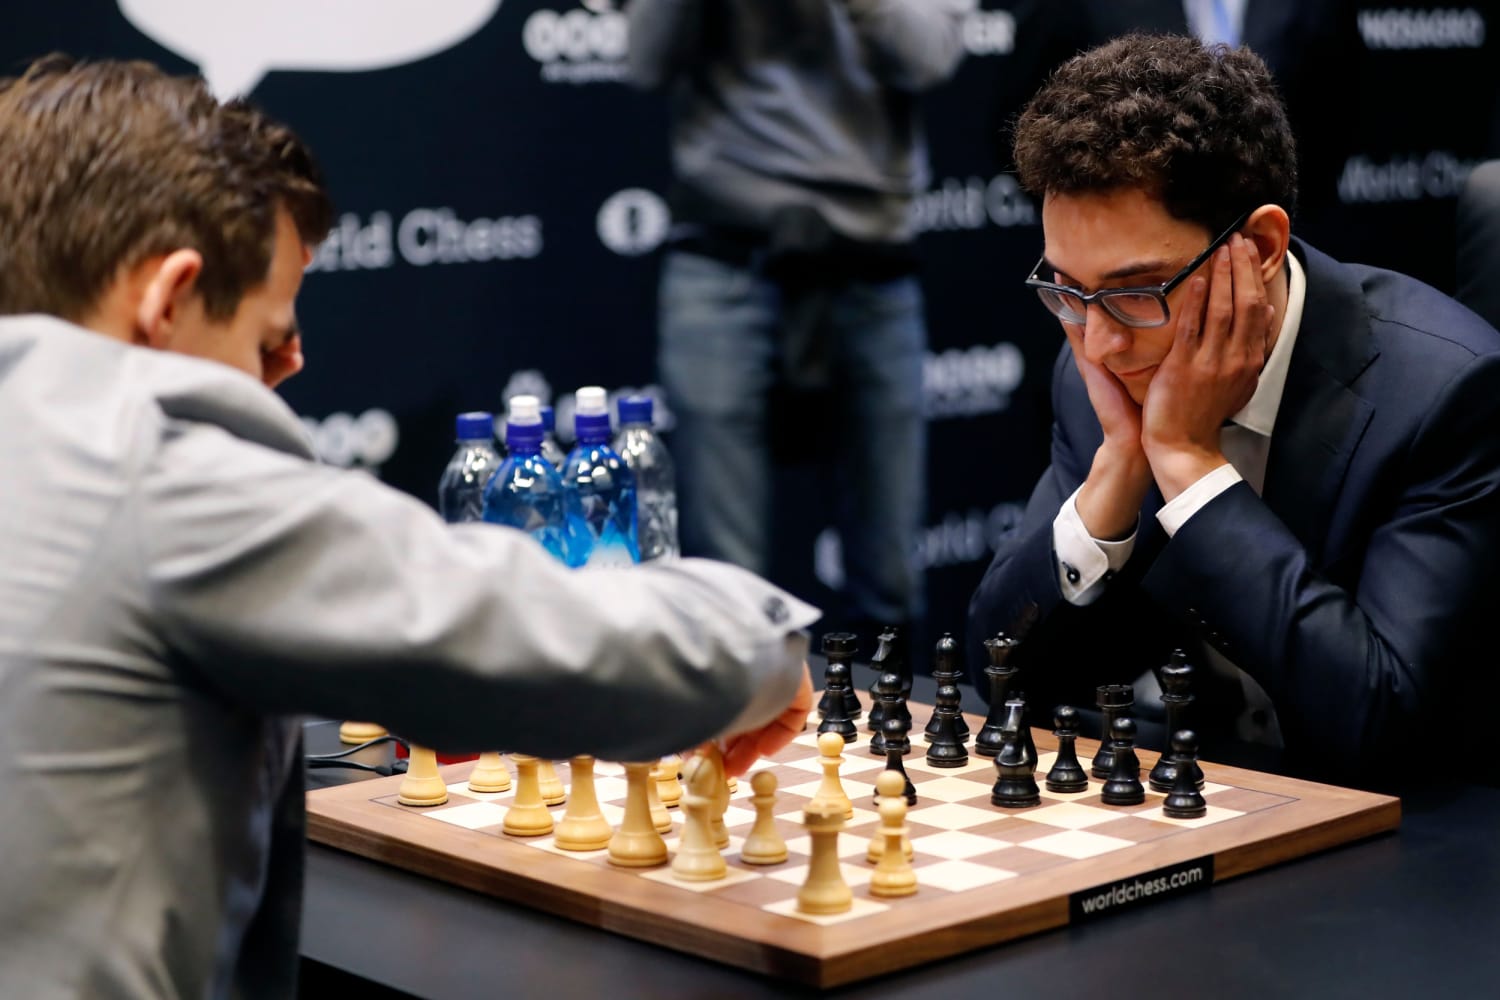 Magnus Carlsen defeats Fabiano Caruana to retain World Chess Championship  title